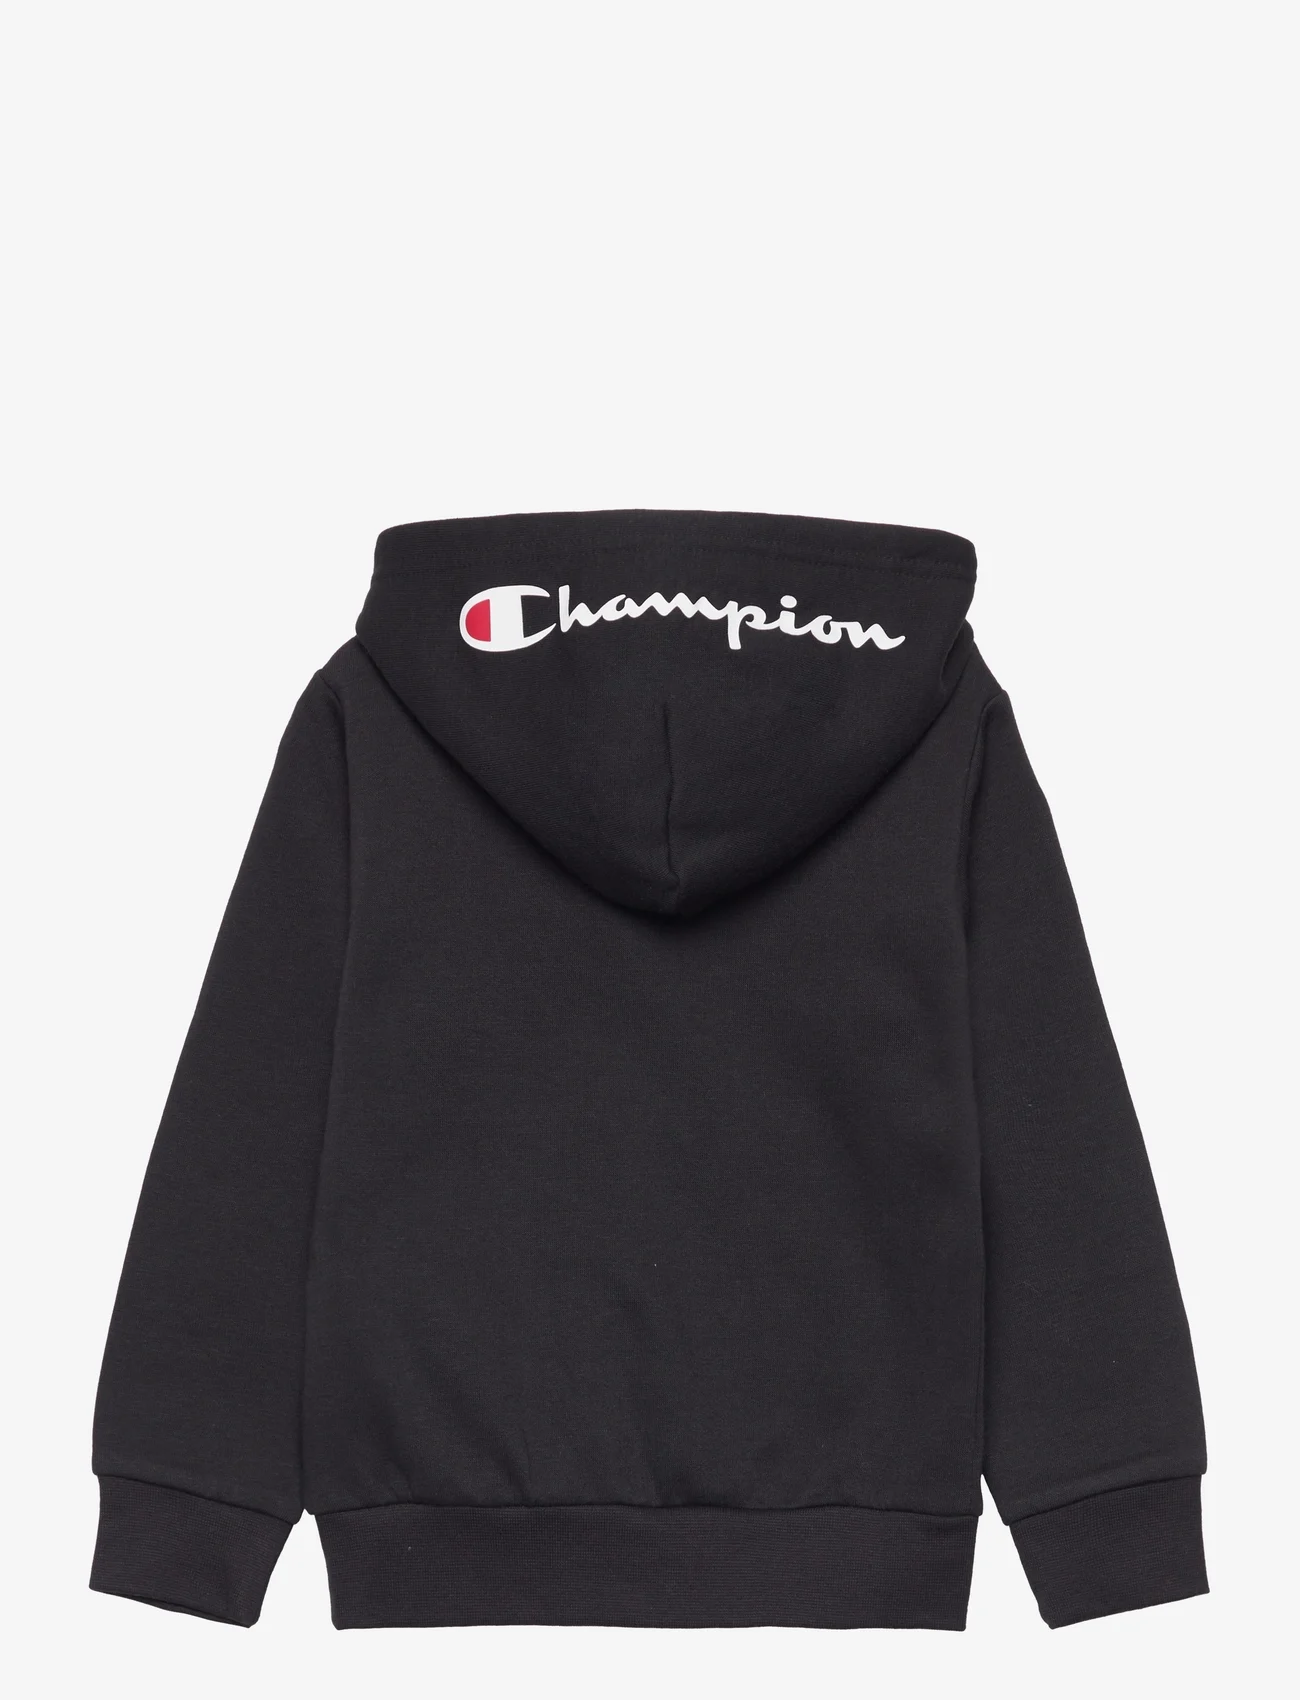 Champion - Half Zip Hooded Sweatshirt - hoodies - black beauty - 1